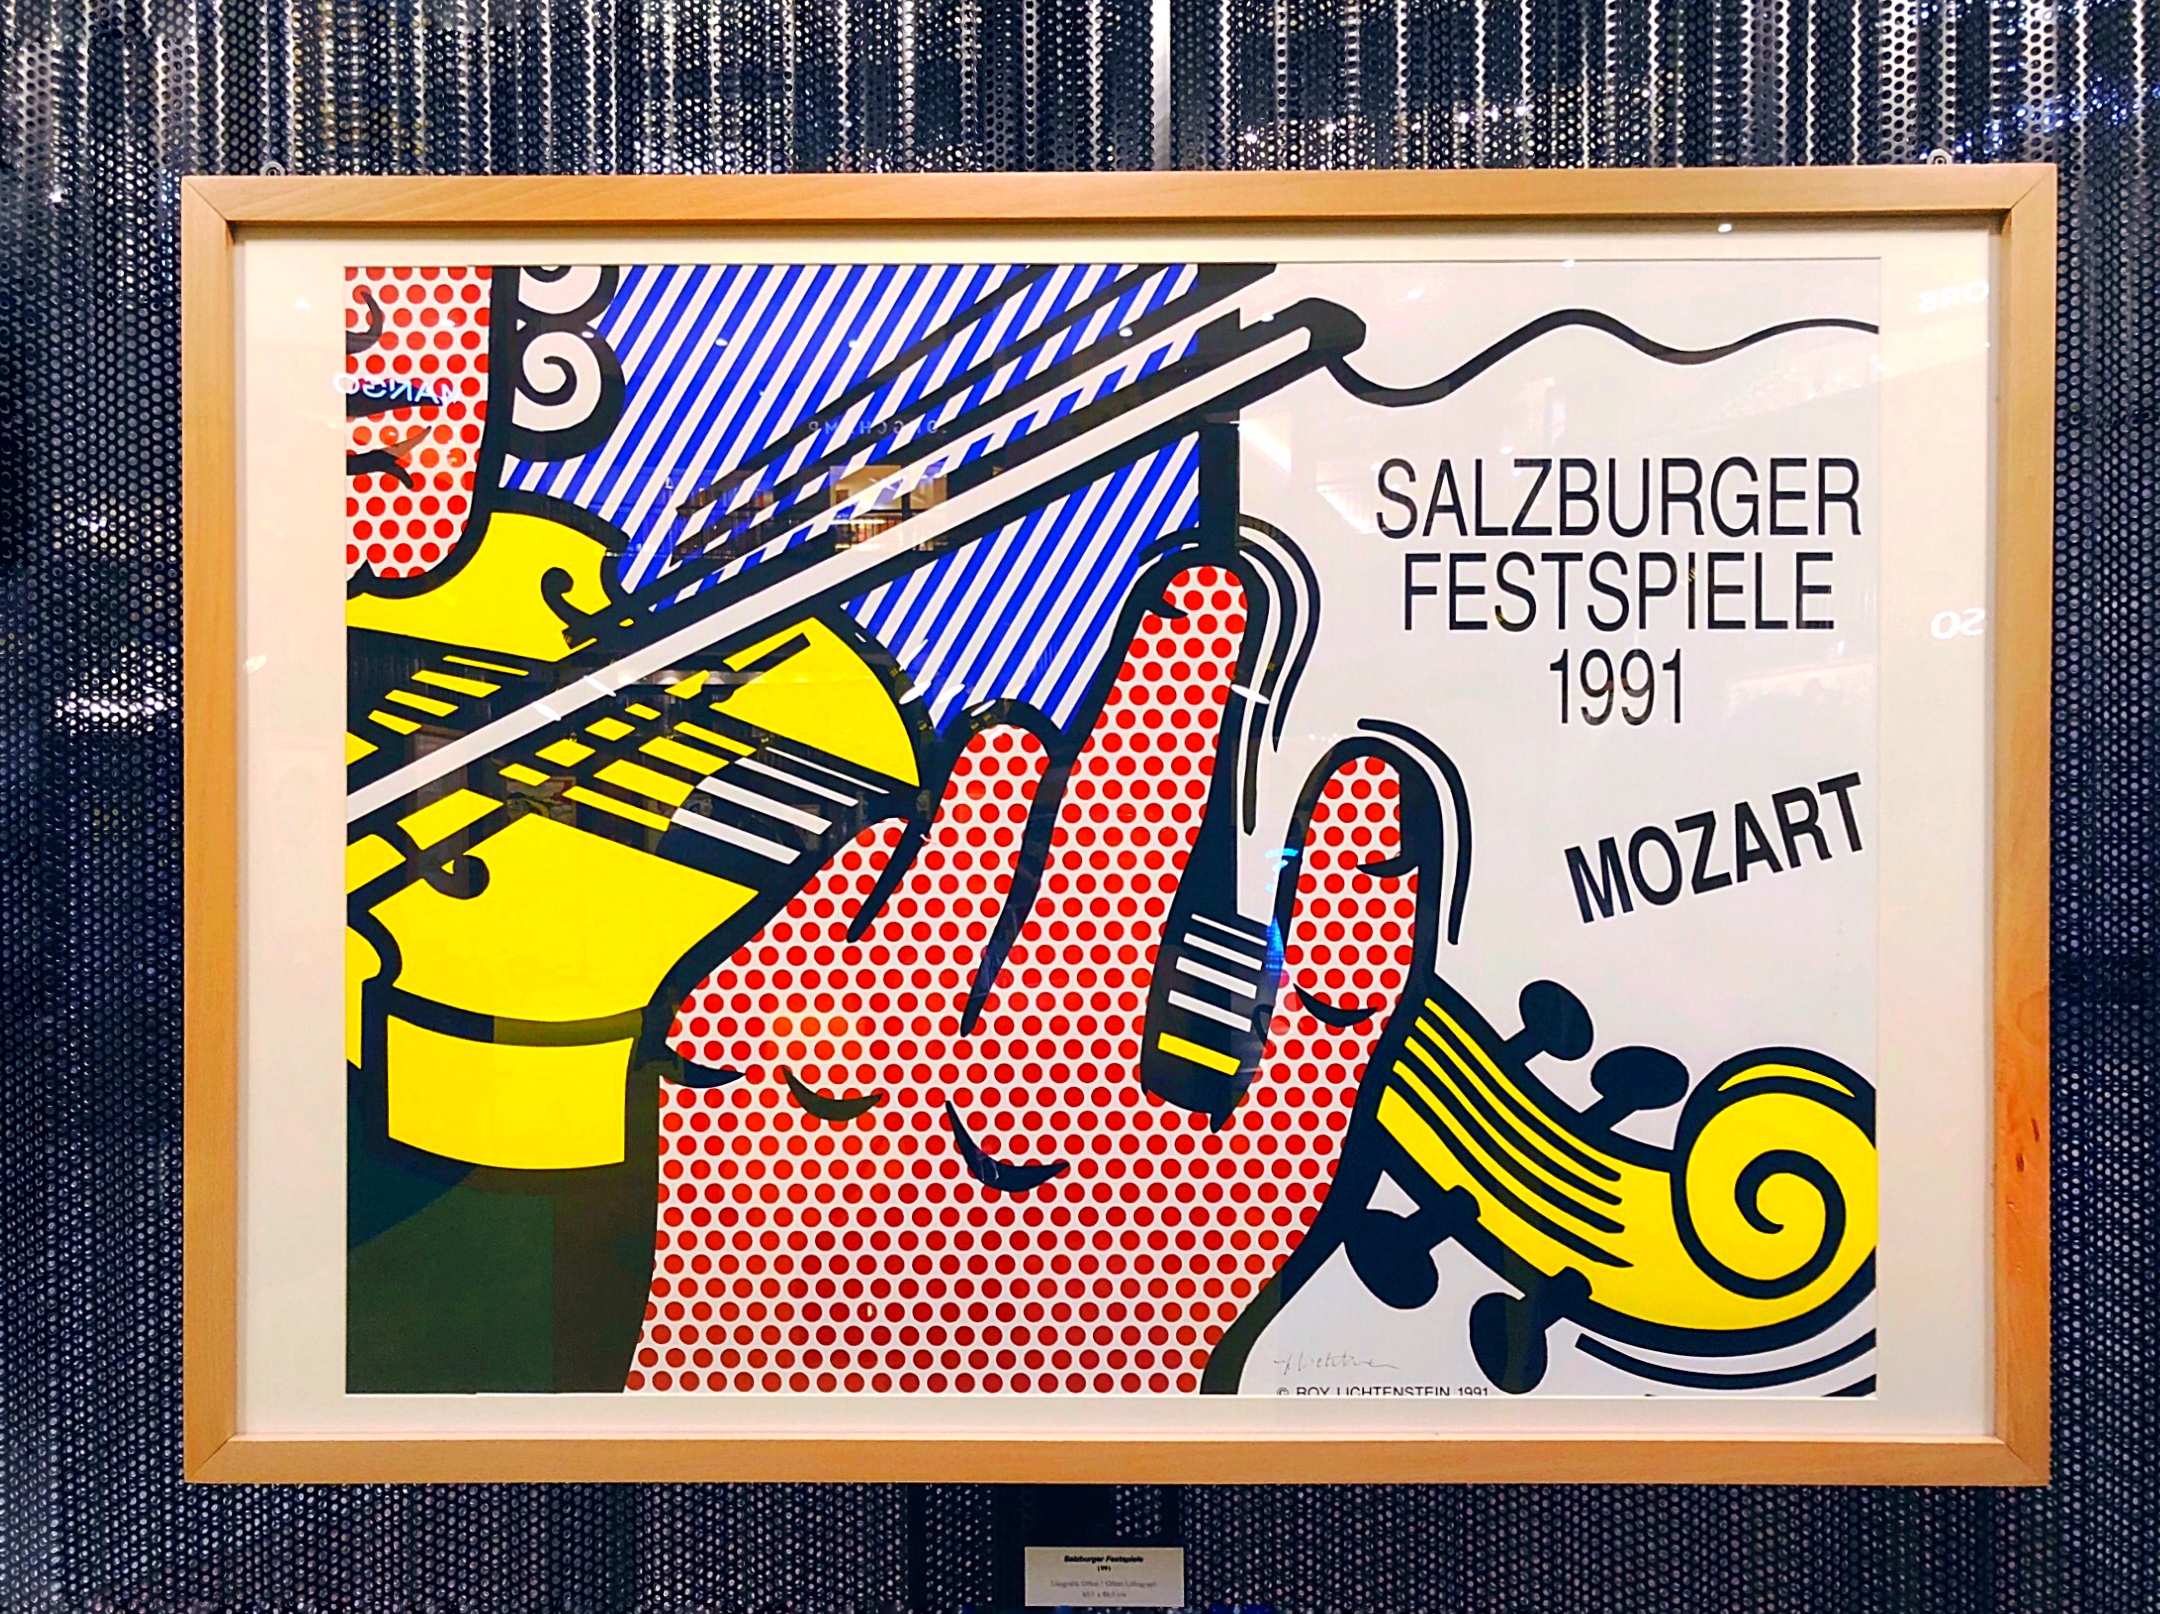 Roy Lichtenstein poster at Colombo Center Lisbon